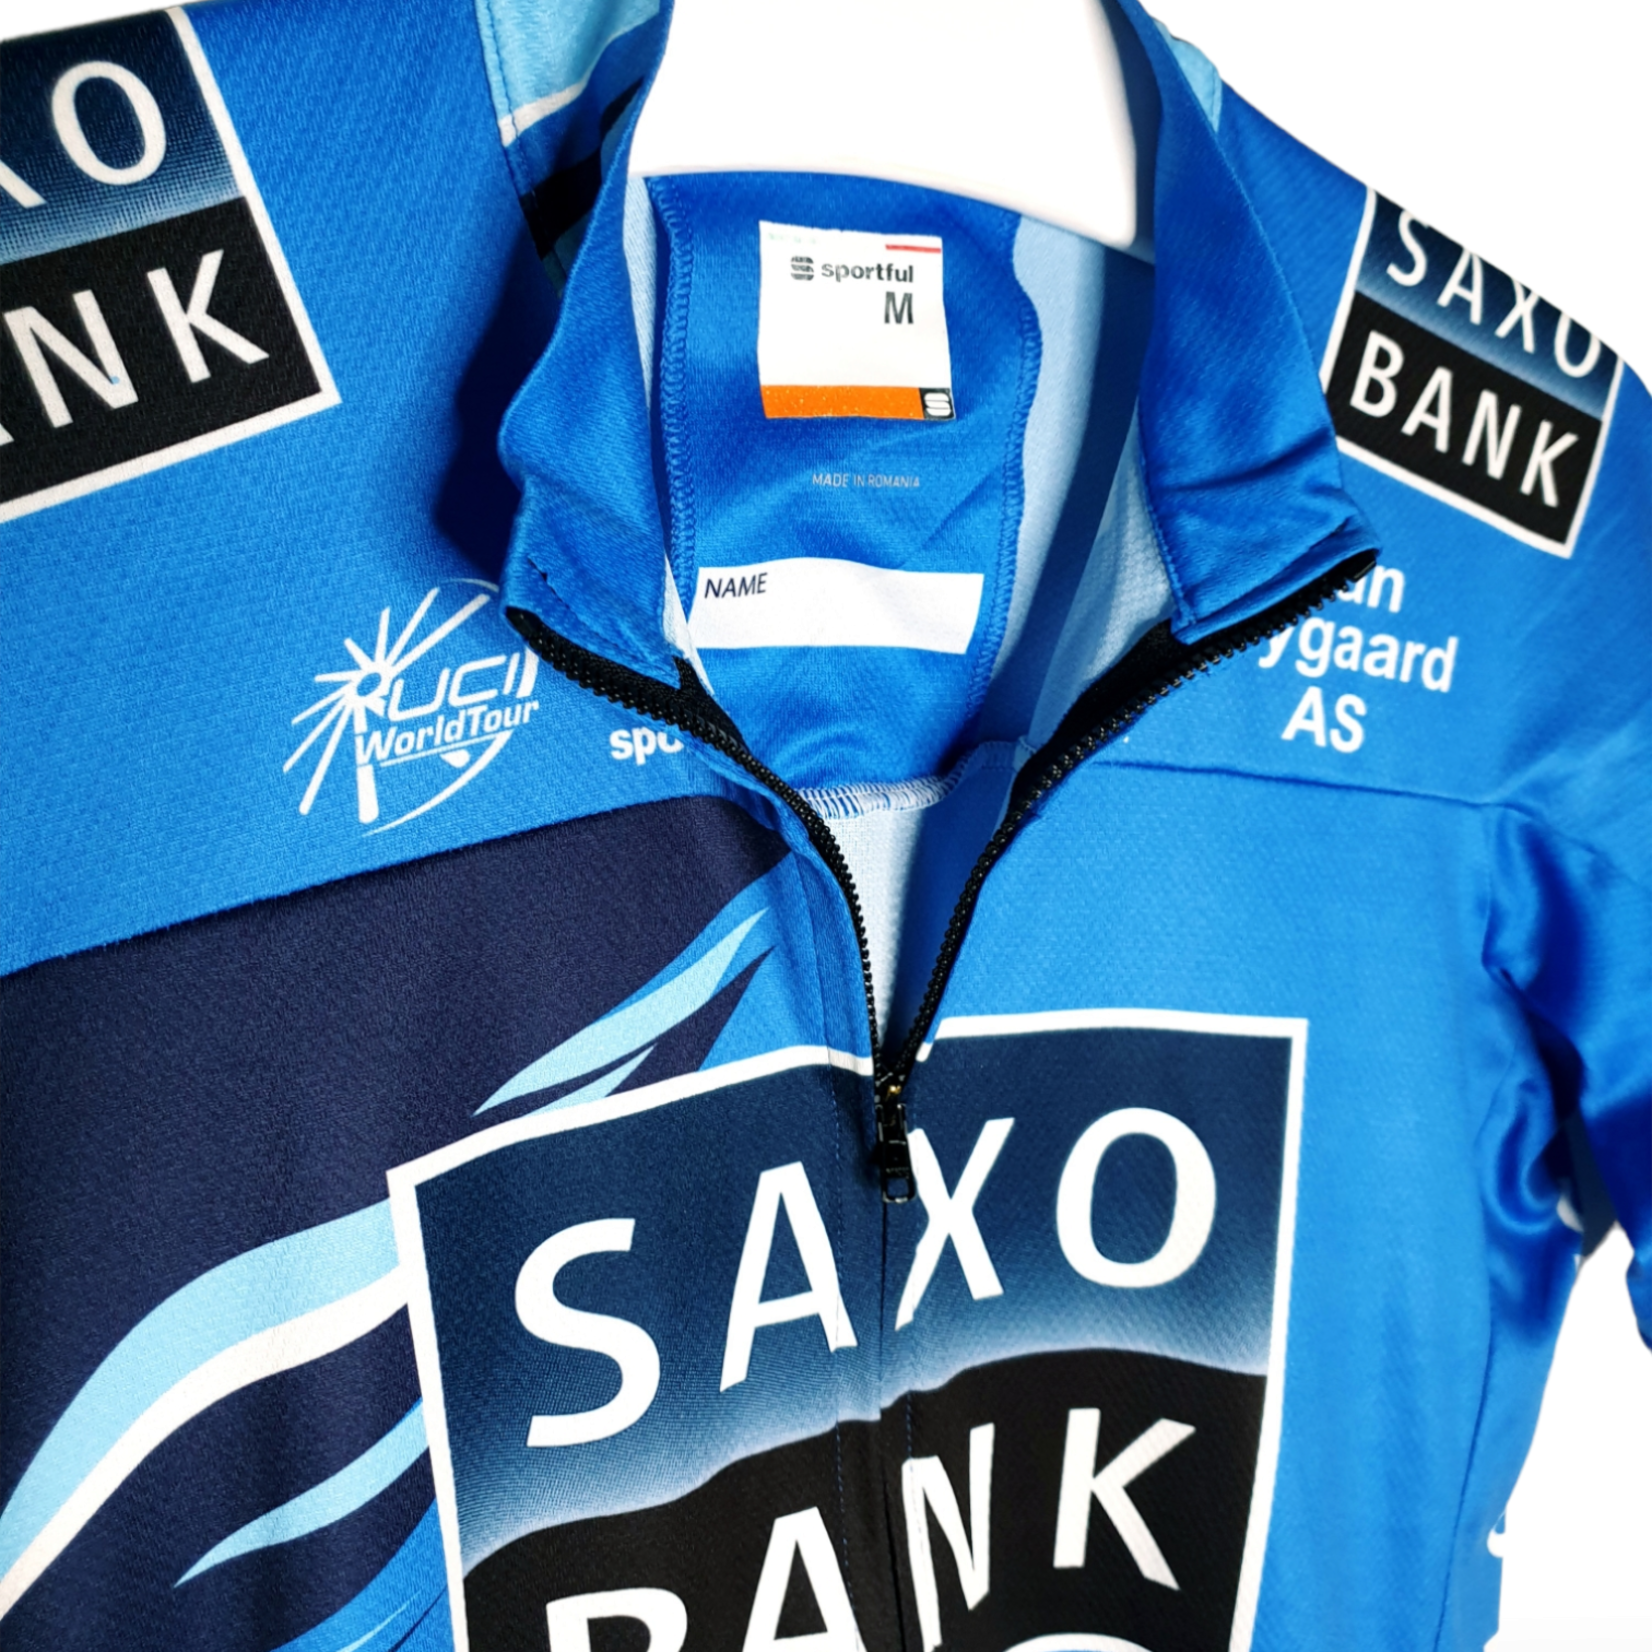 Sportful Origineel Sportful vintage wielershirt Saxo Bank 2012